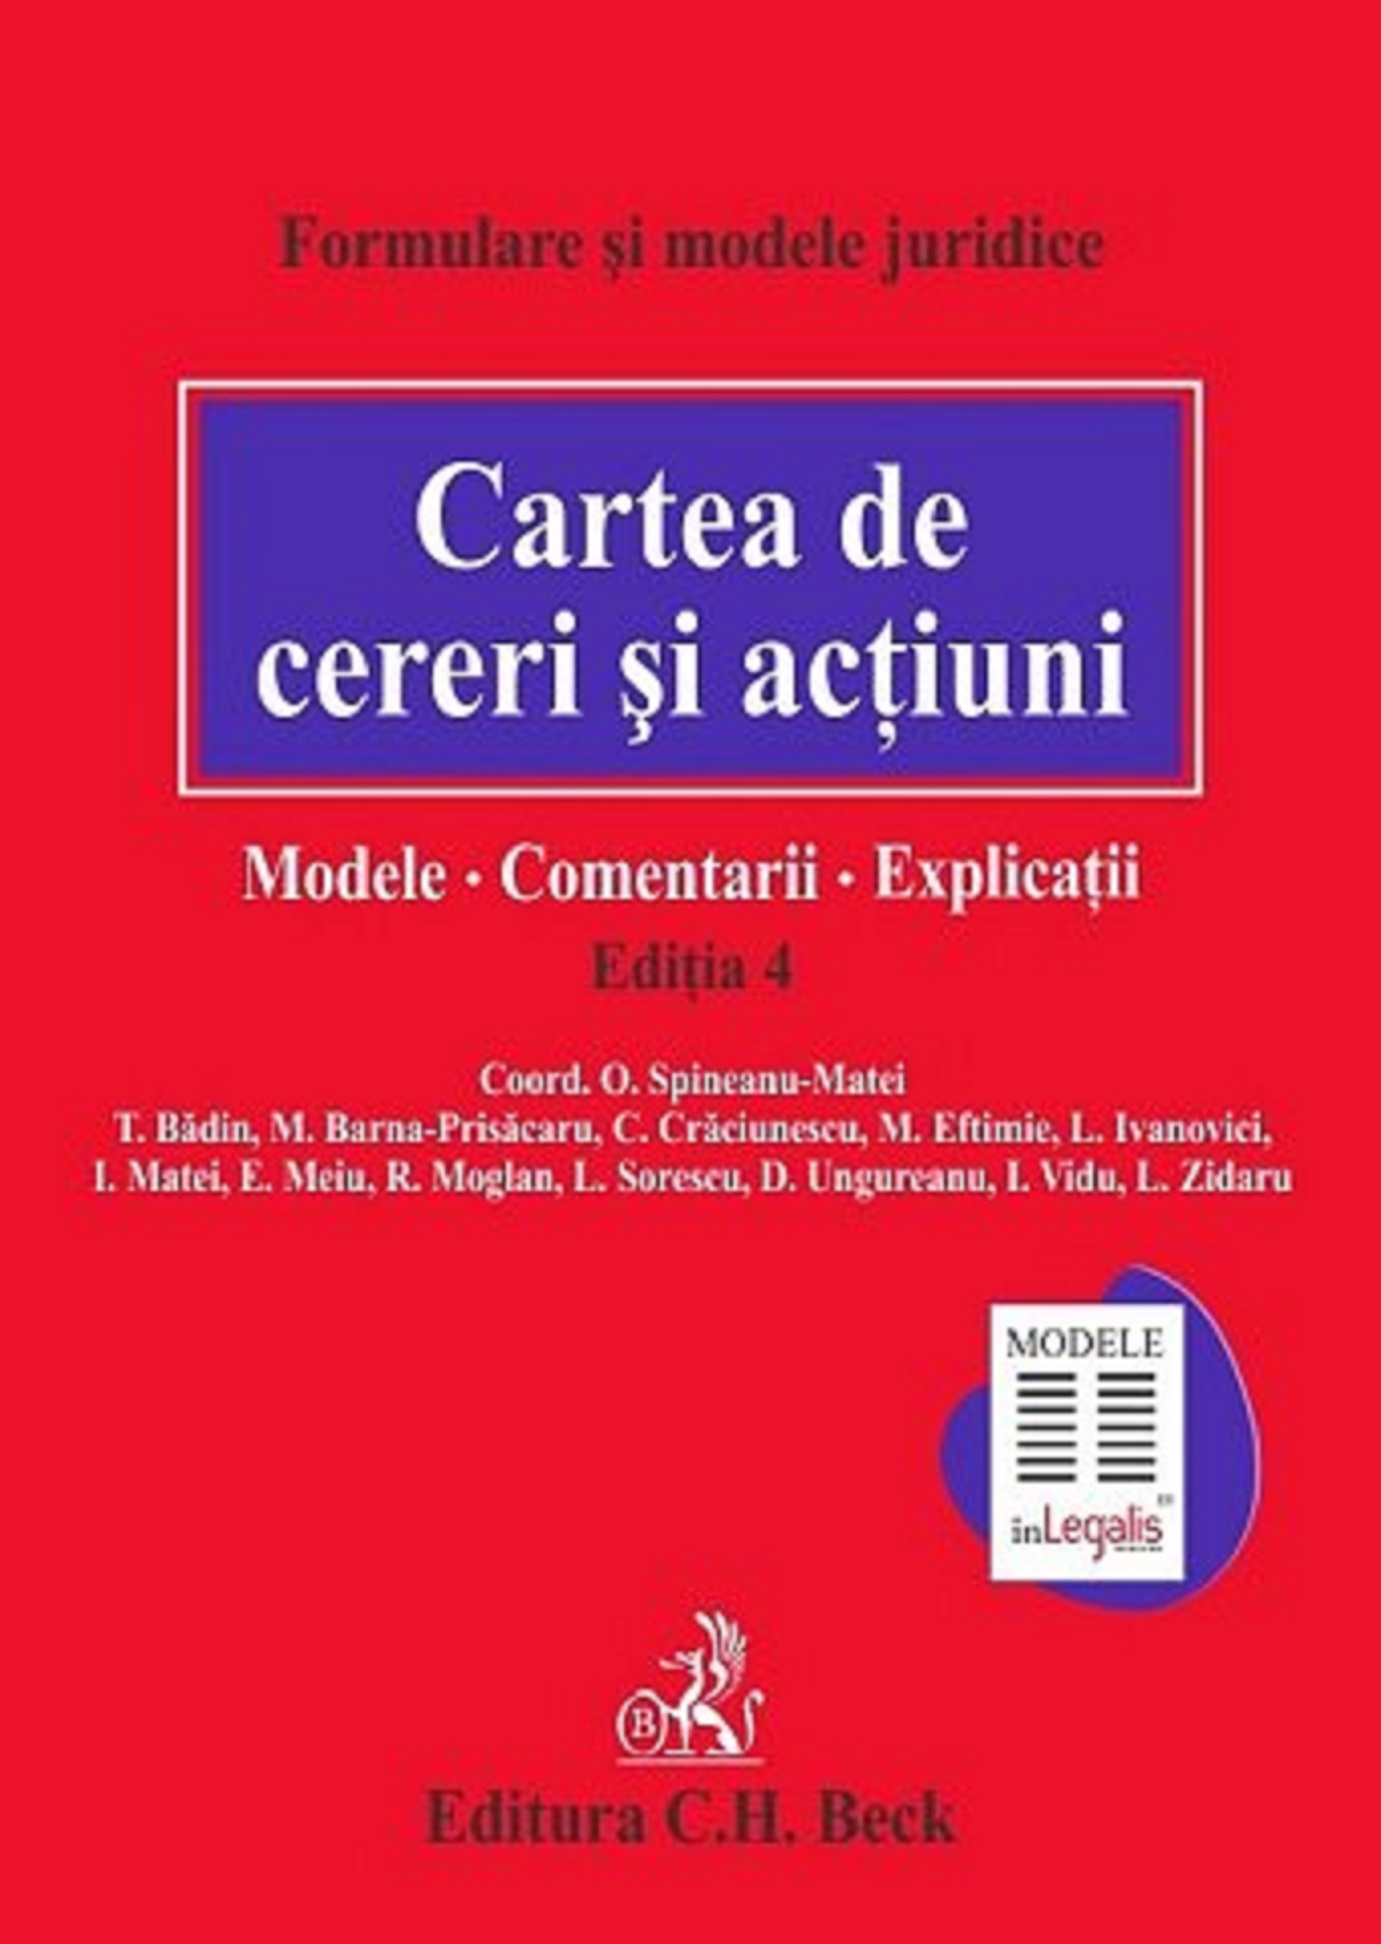 Cartea de cereri si actiuni. Modele | T. Badin, M. Barna-Prisacaru, M. Eftimie C.H. Beck poza bestsellers.ro